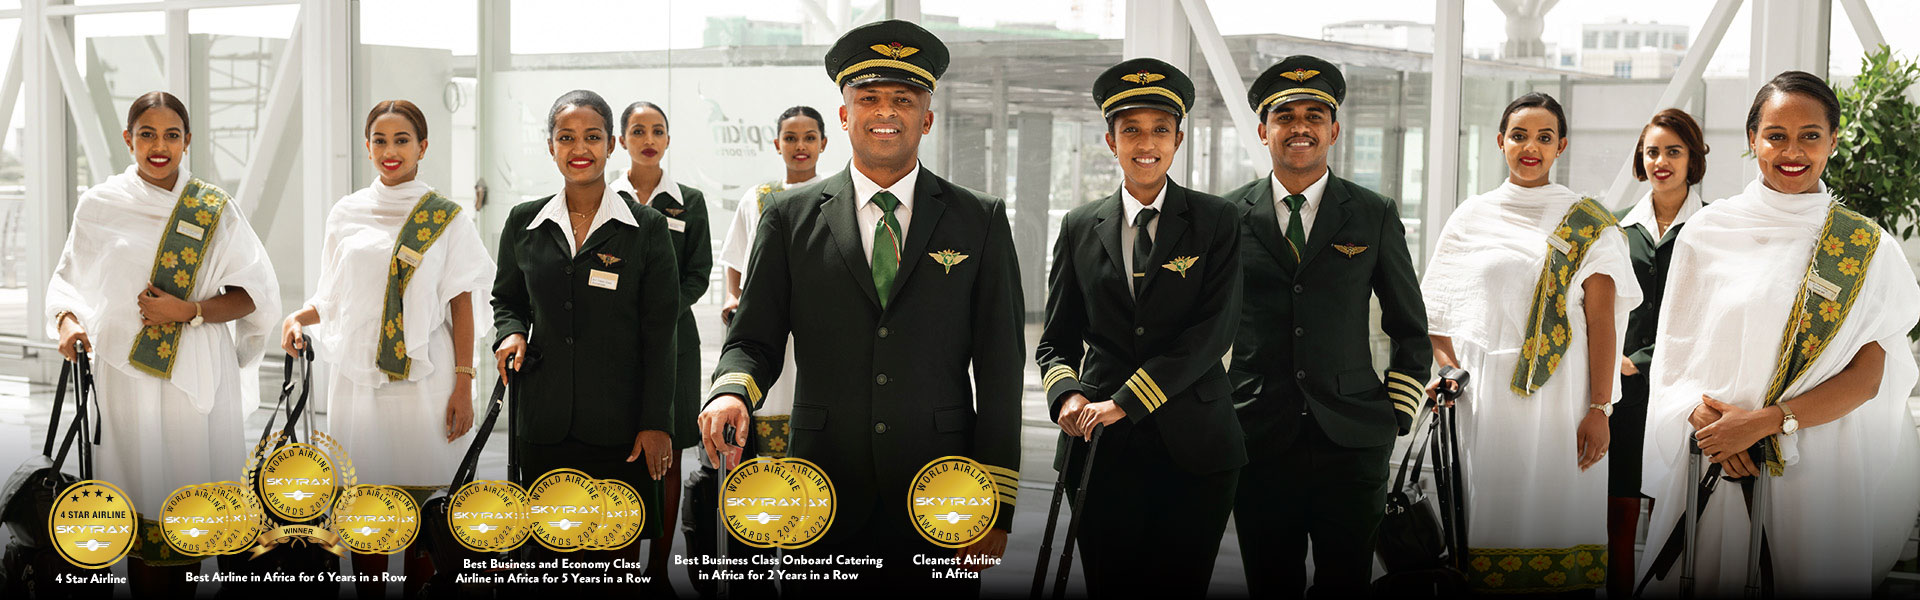 Ethiopian-Airlines Awards